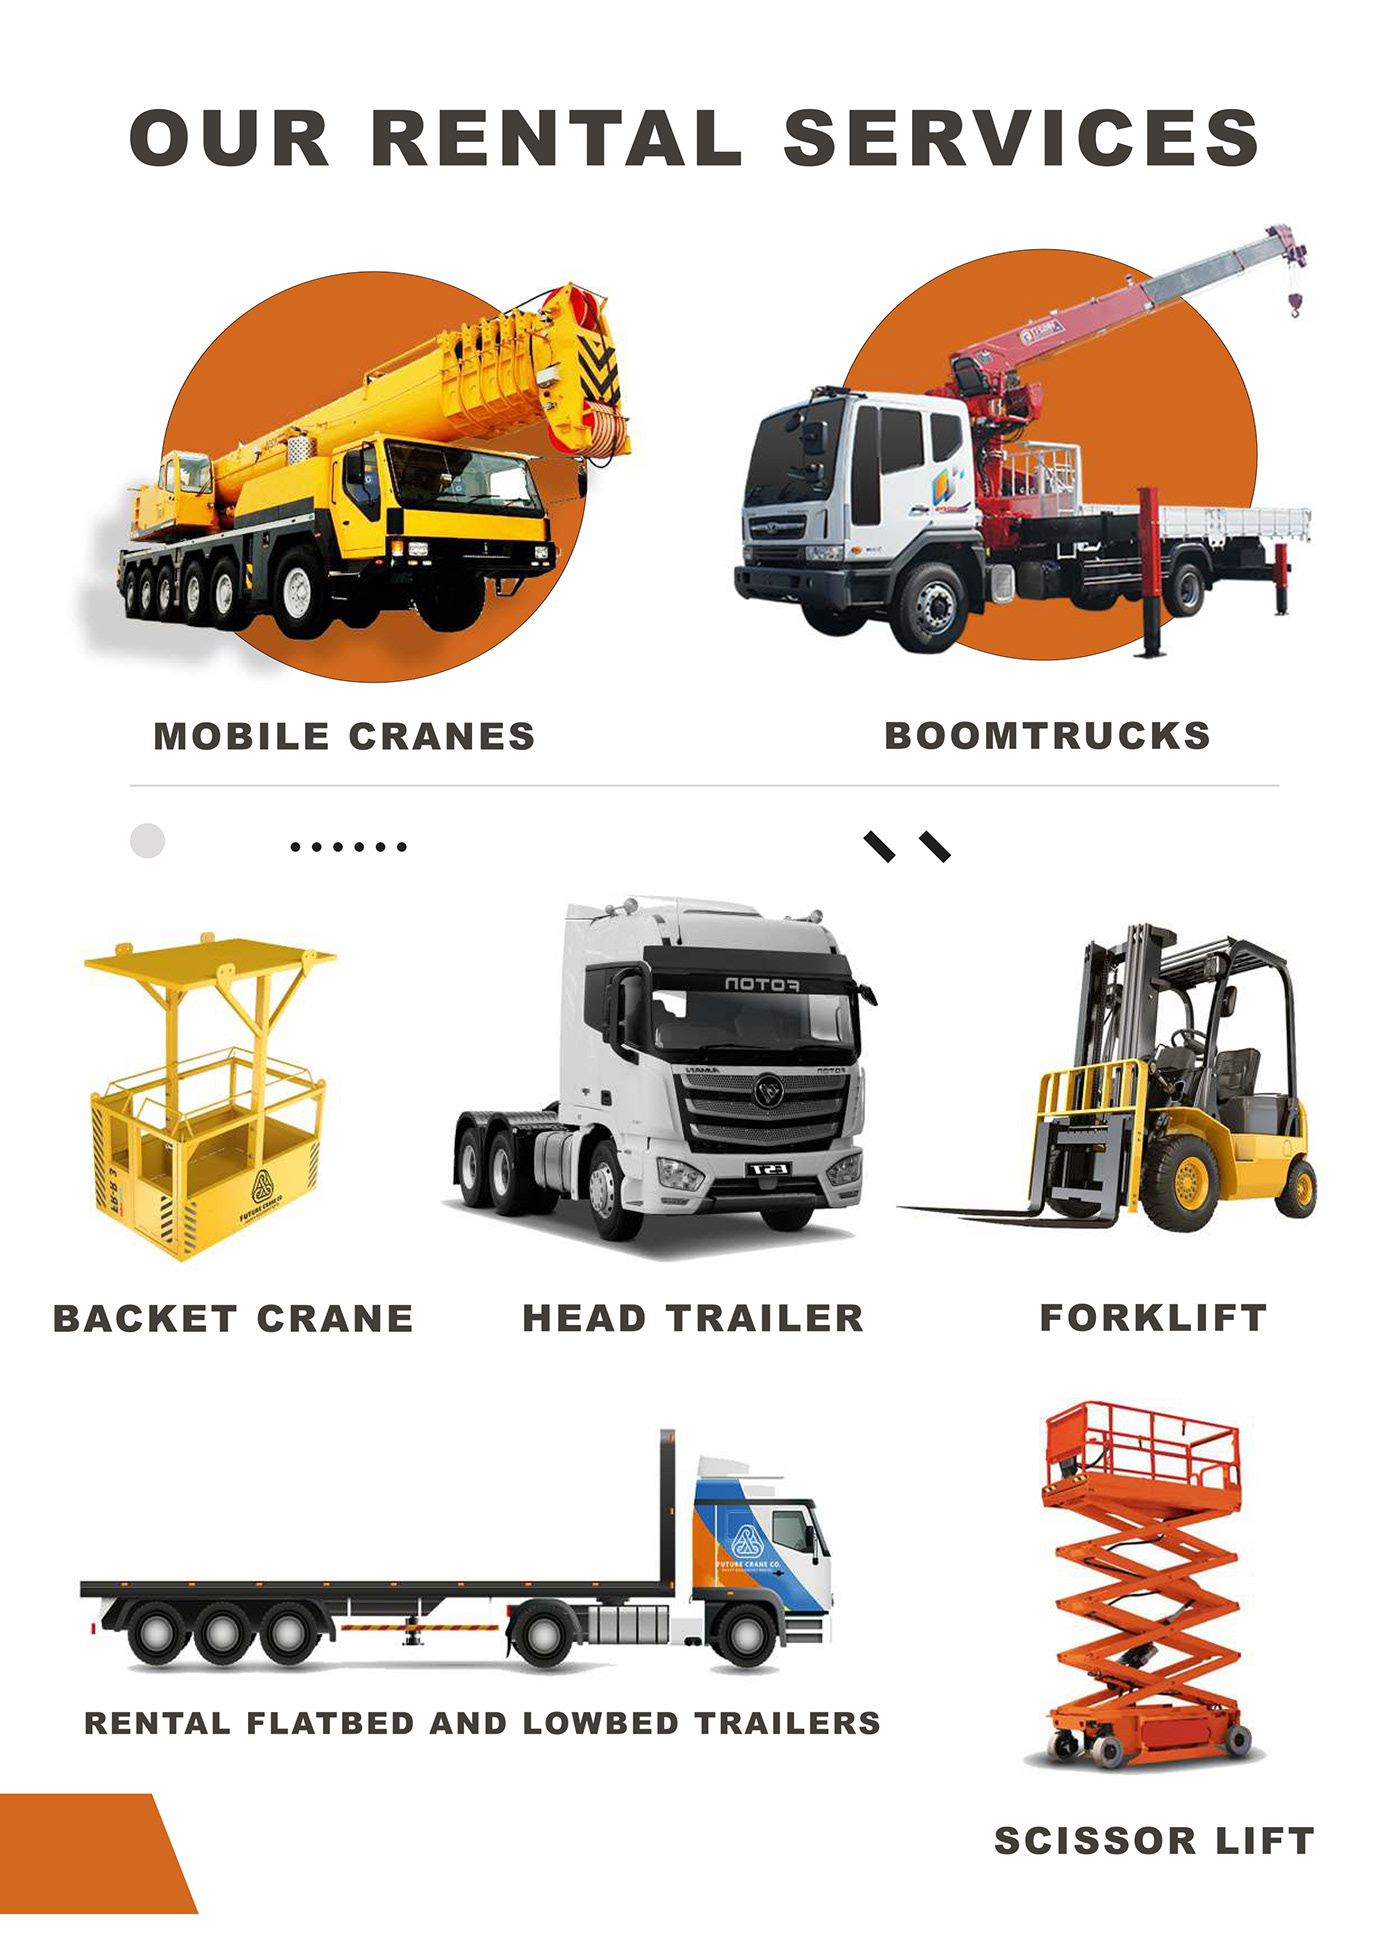 crane company profile corporate flyer profile profile design heavy equipment rental cranes Forklift industrial Company Brochure